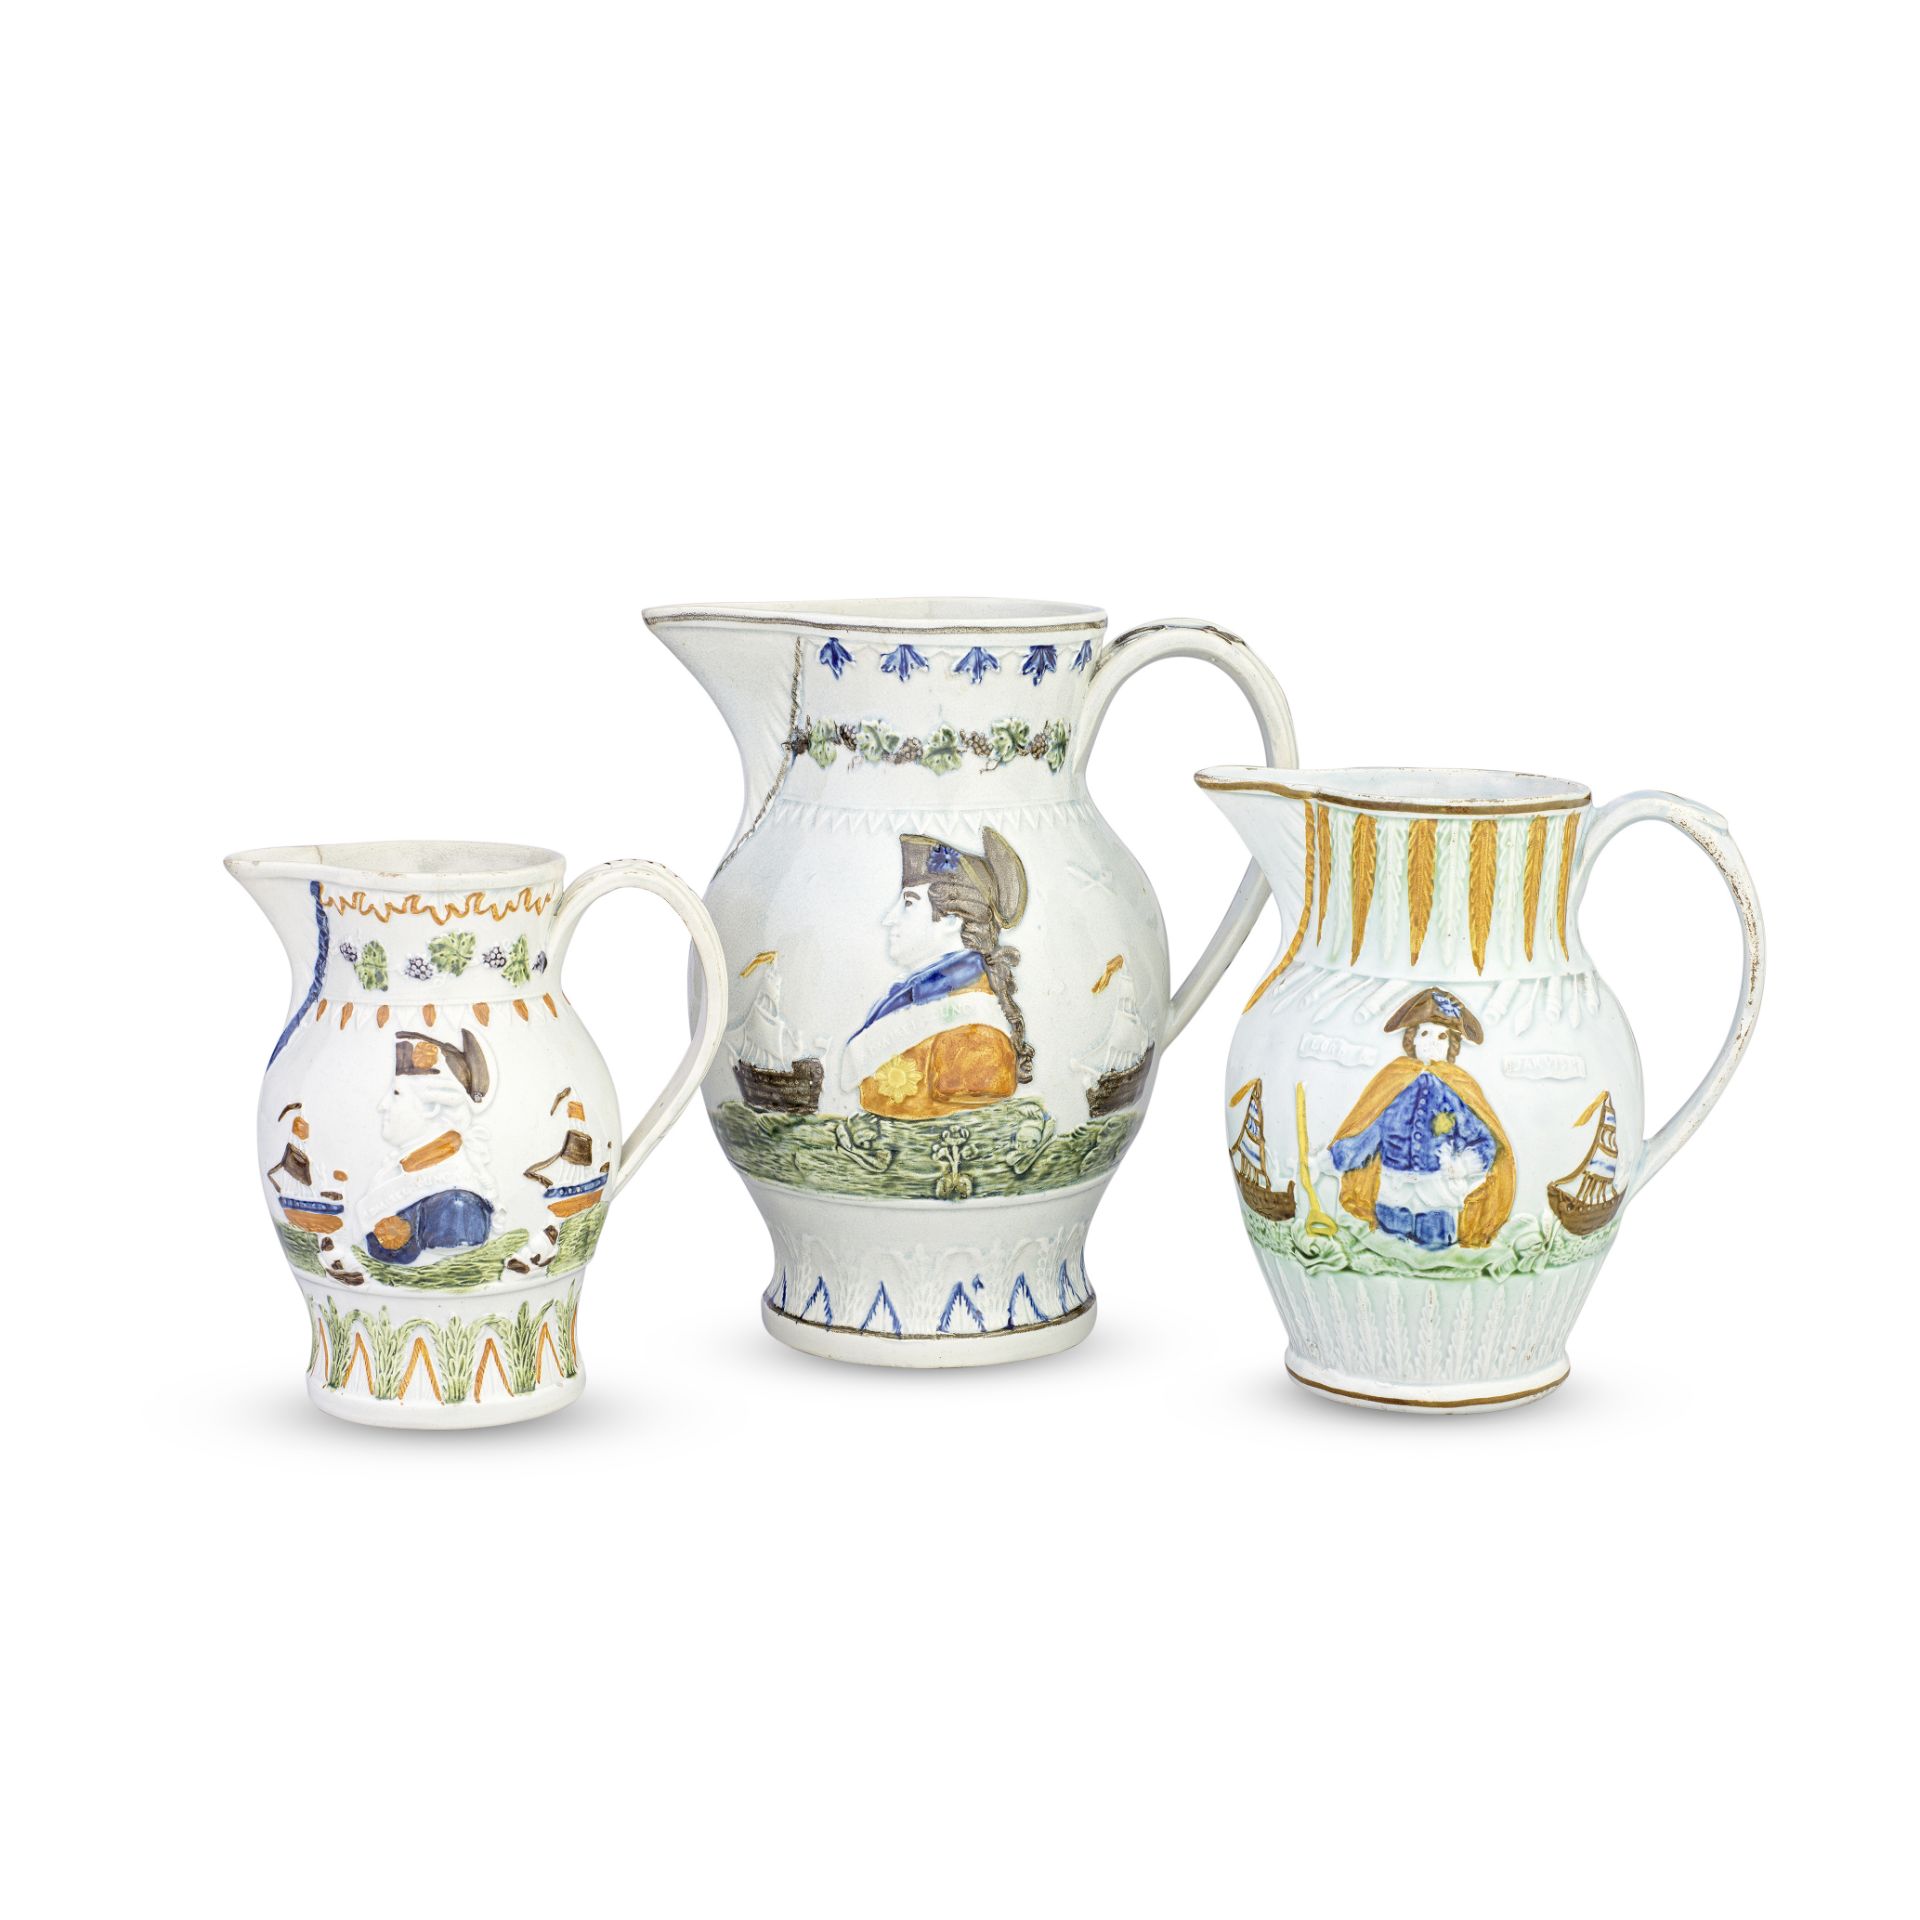 Three Prattware jugs, circa 1800